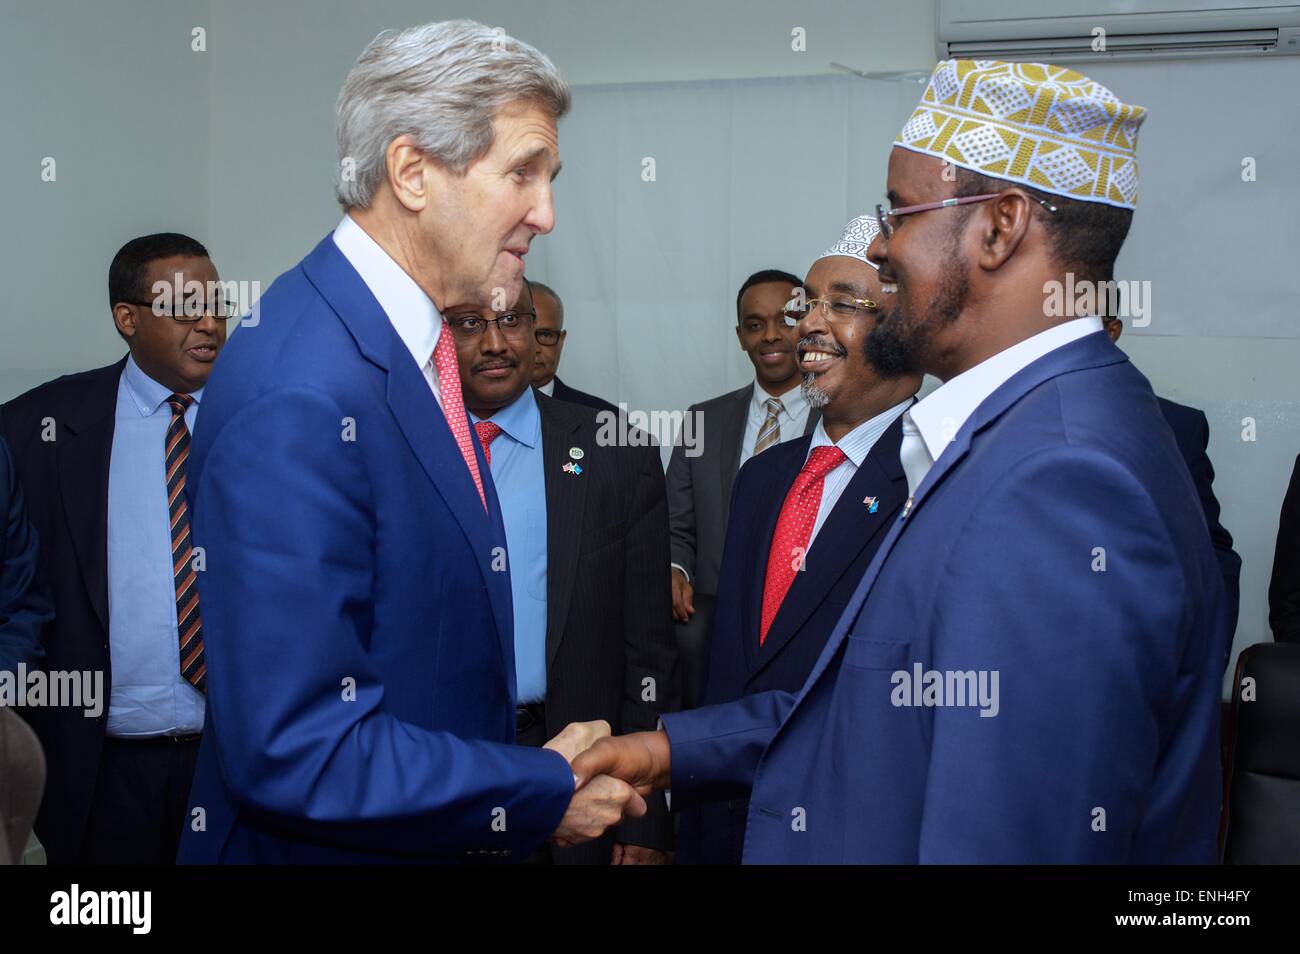 Mogadishu, Somalia. 5th May, 2015. US Secretary of State John Kerry shakes hands with Ahmed Madobe, Interim Juba Administration President, after arriving on an unannounced surprise visit May 5, 2015 in Mogadishu, Somalia. Stock Photo